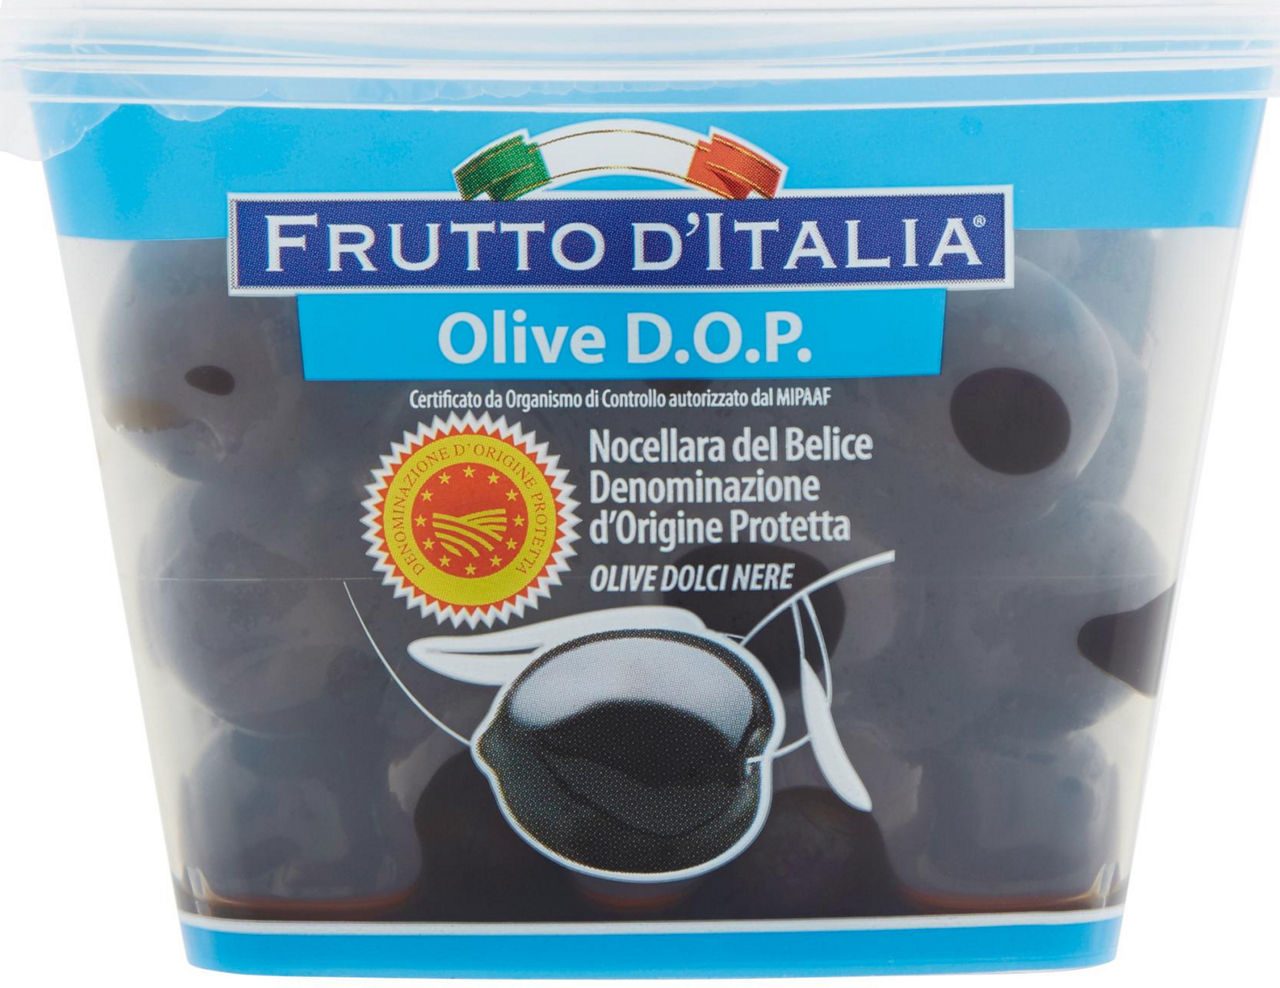 Olive dolci nere d.o.p. nocellara del belice olive 250 g